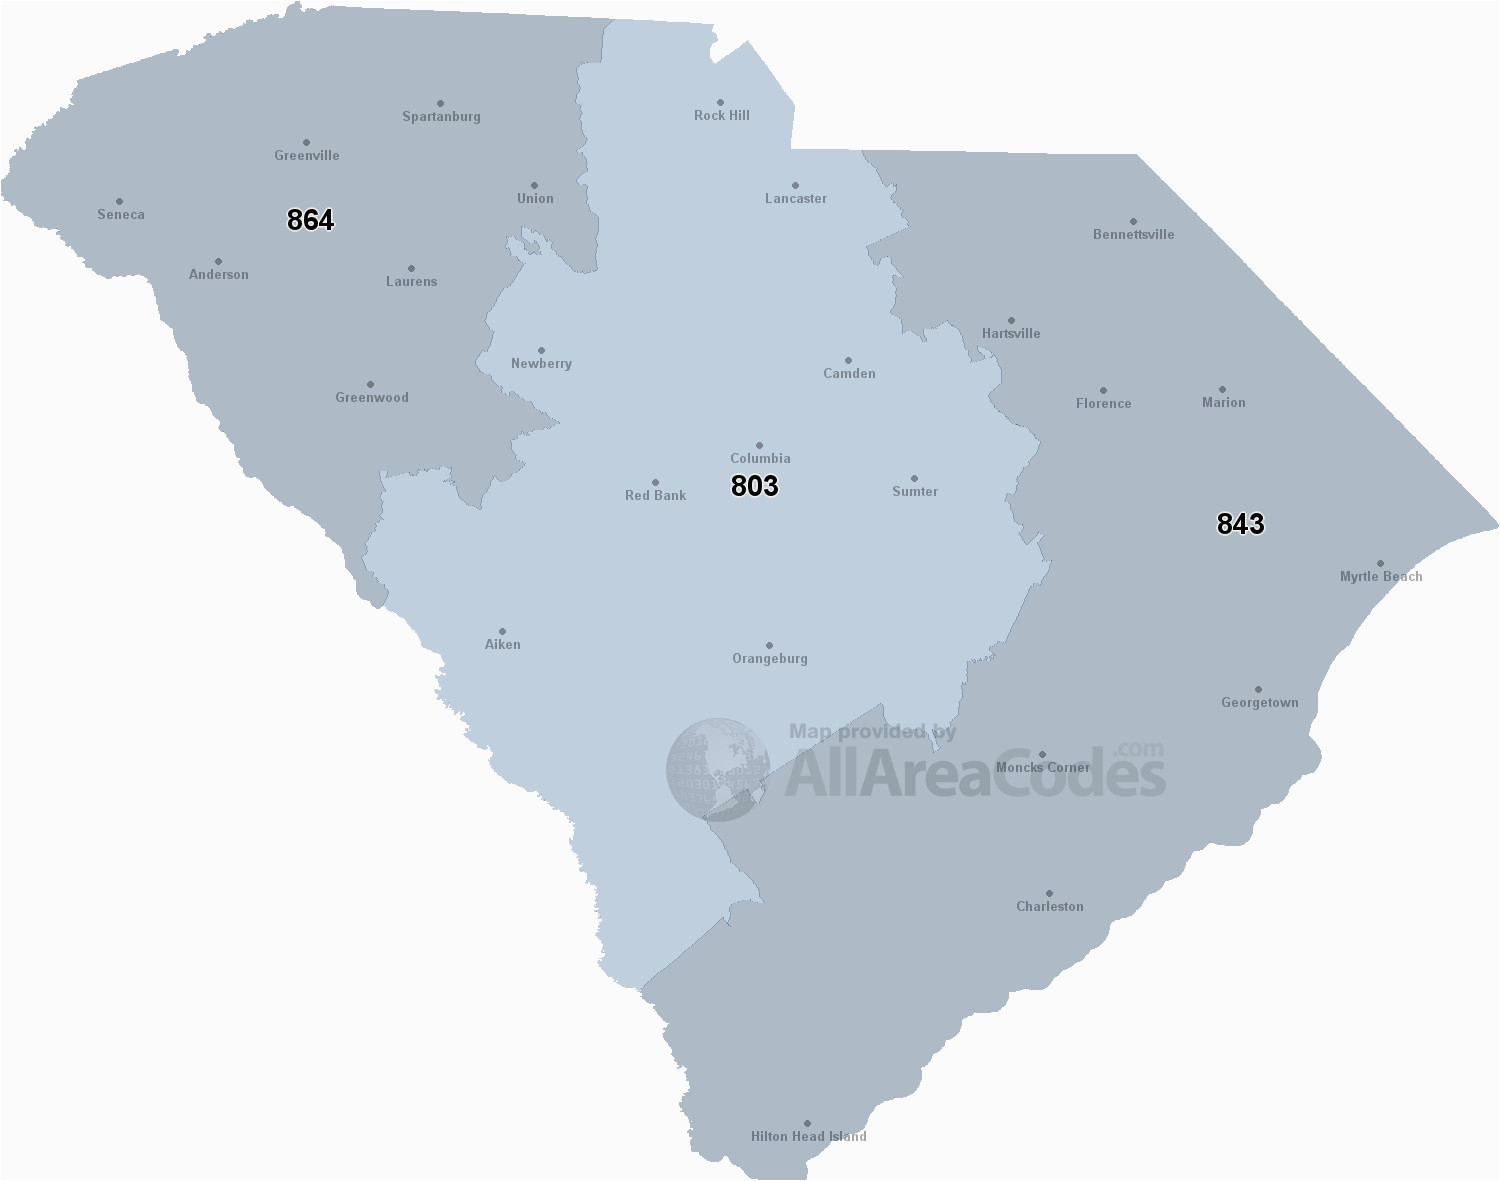 North Carolina area Codes Map south Carolina area Codes Map List and Phone Lookup